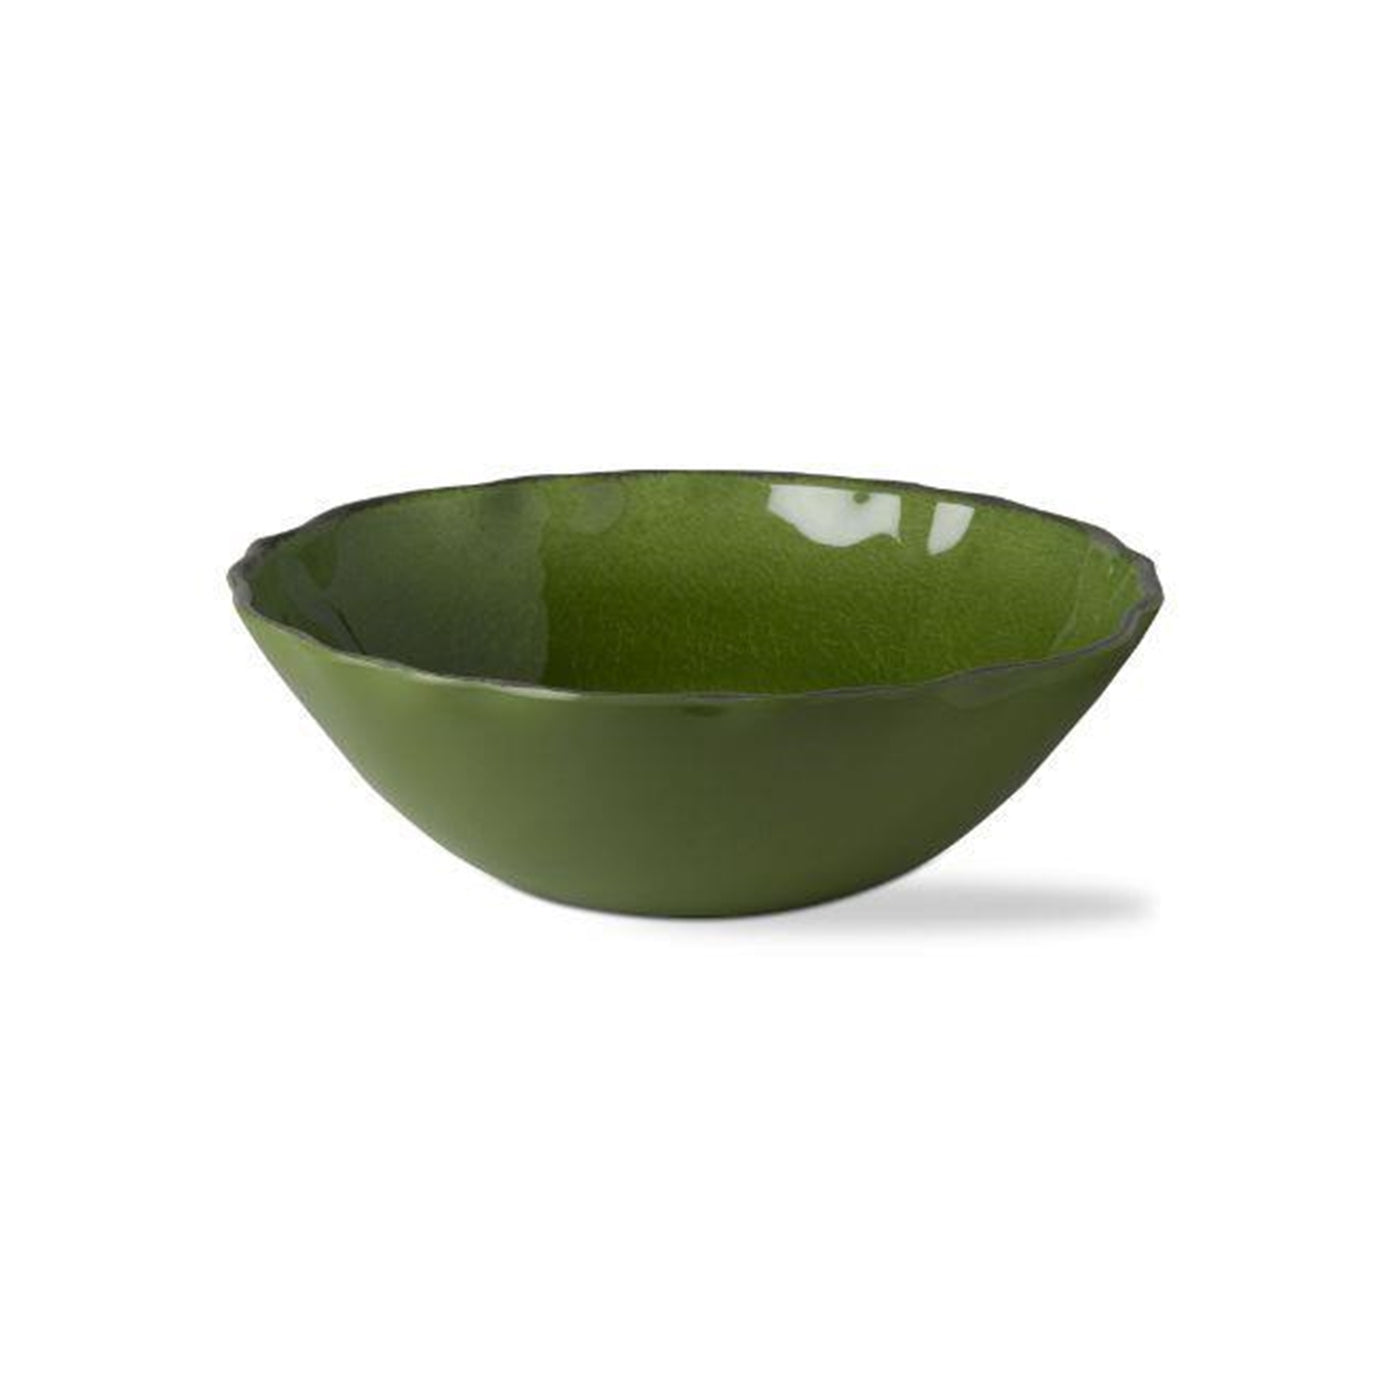 Veranda Melamine Serving Bowl - Green